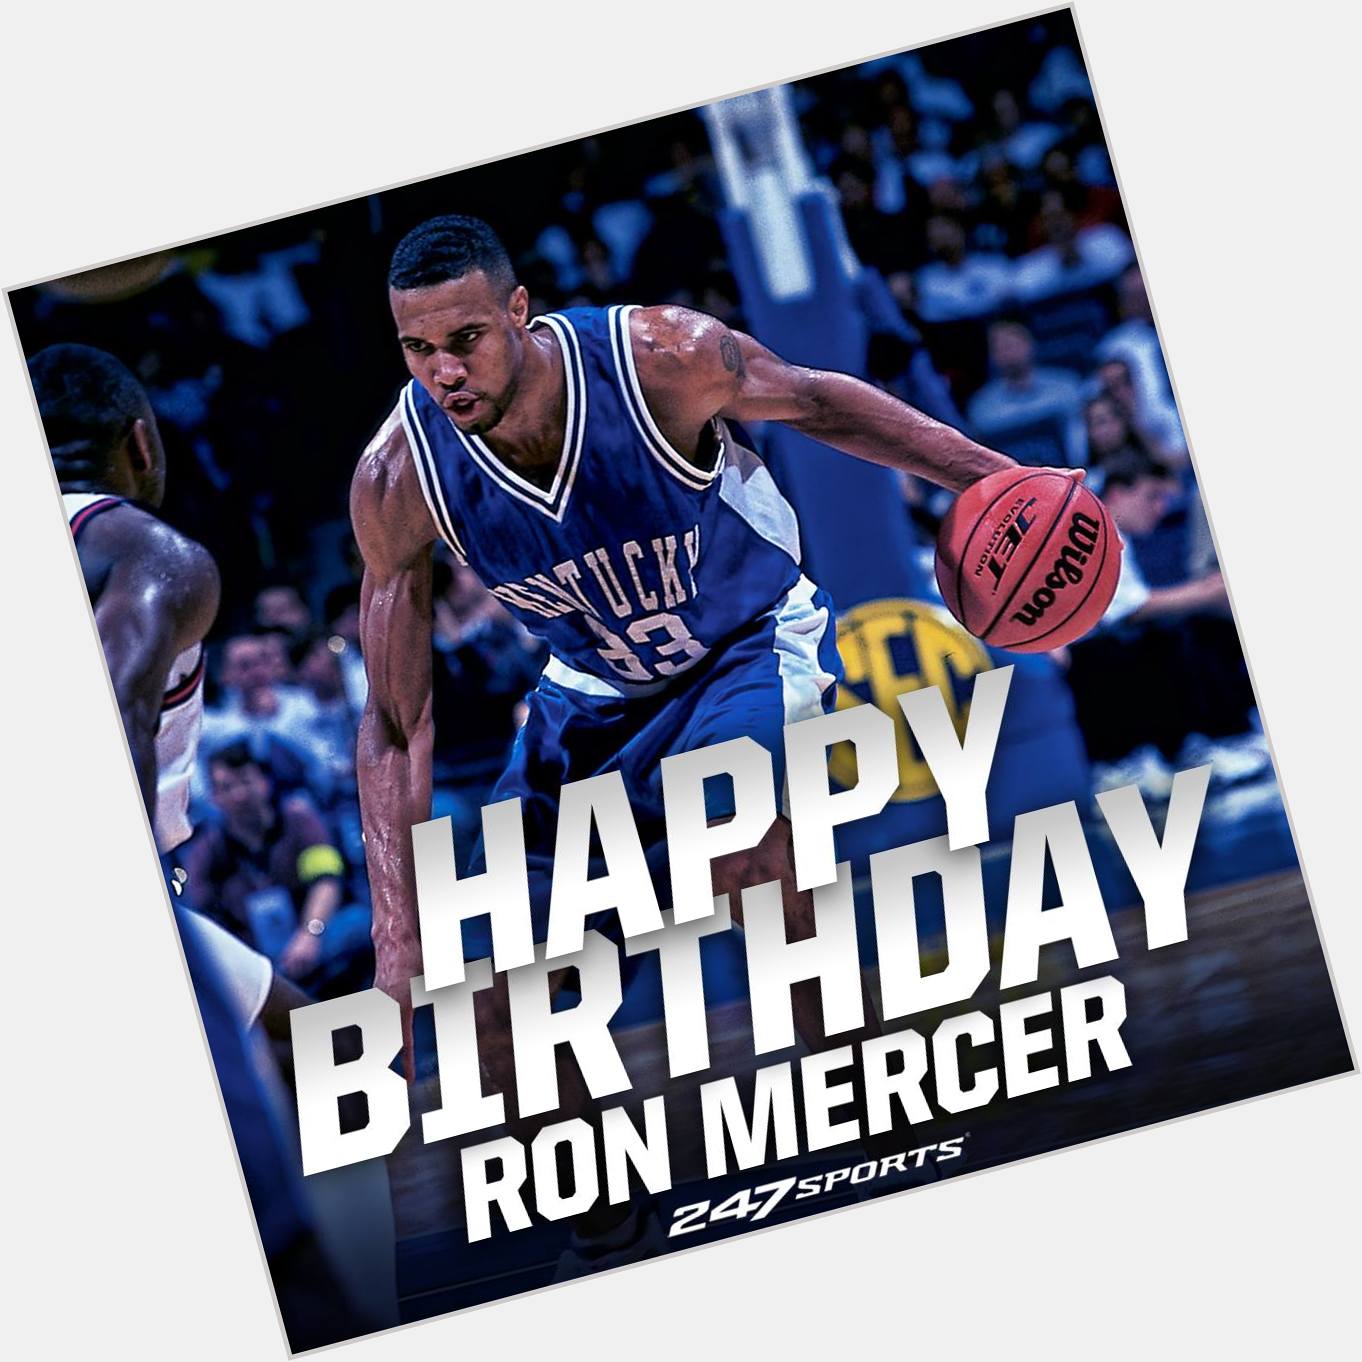 Happy birthday to 1996 national champion Ron Mercer! 